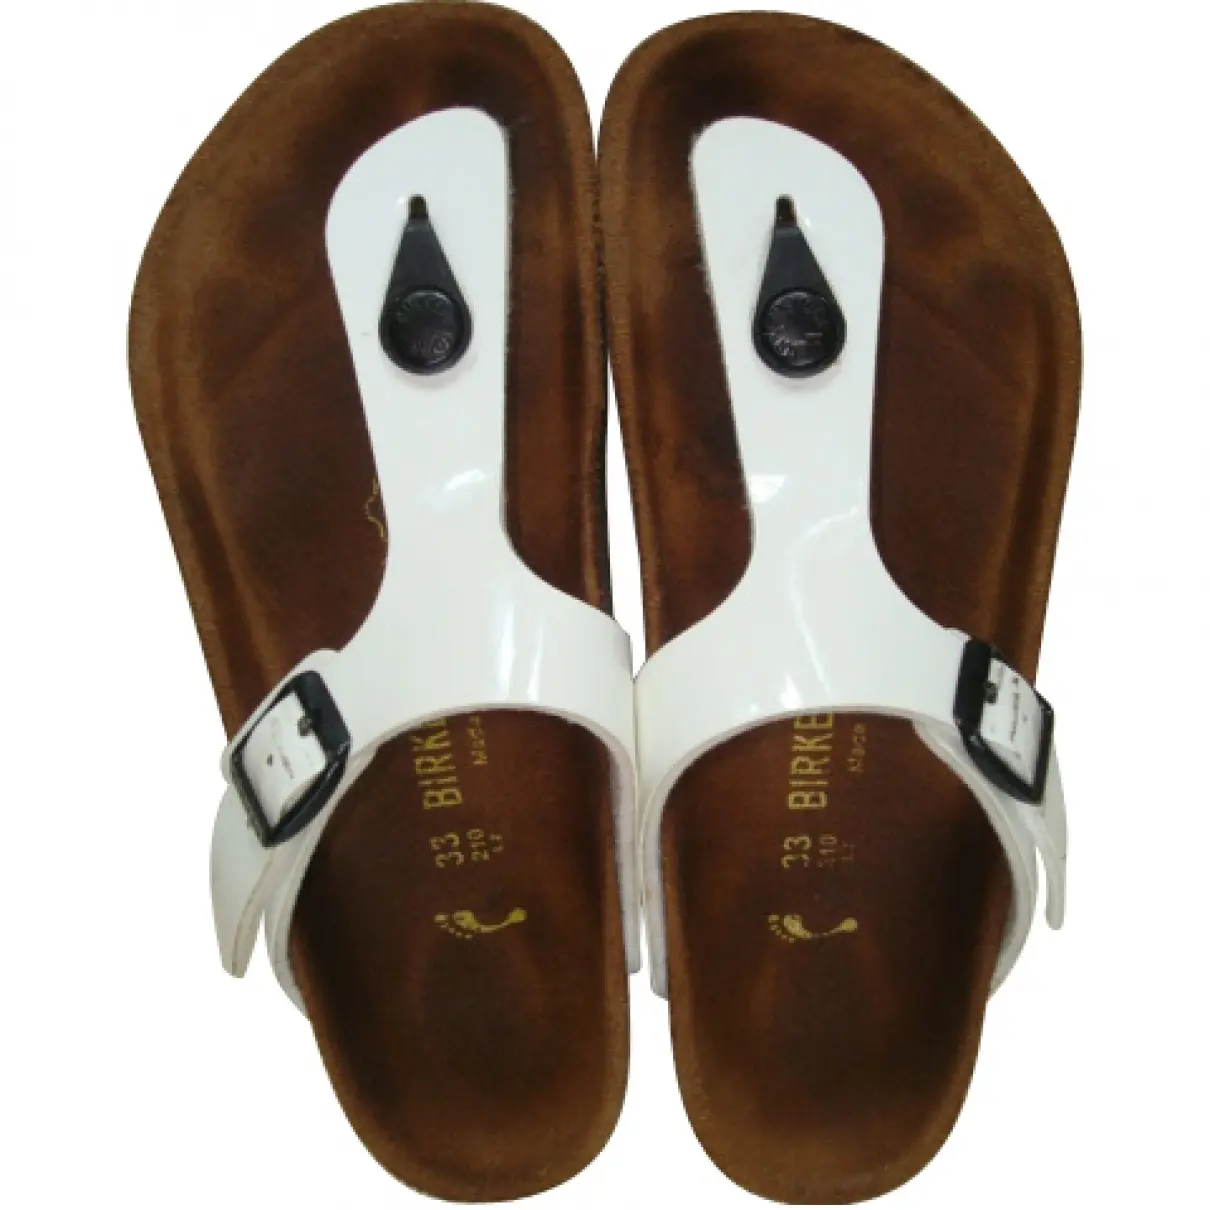 White Patent leather Sandals Birkenstock